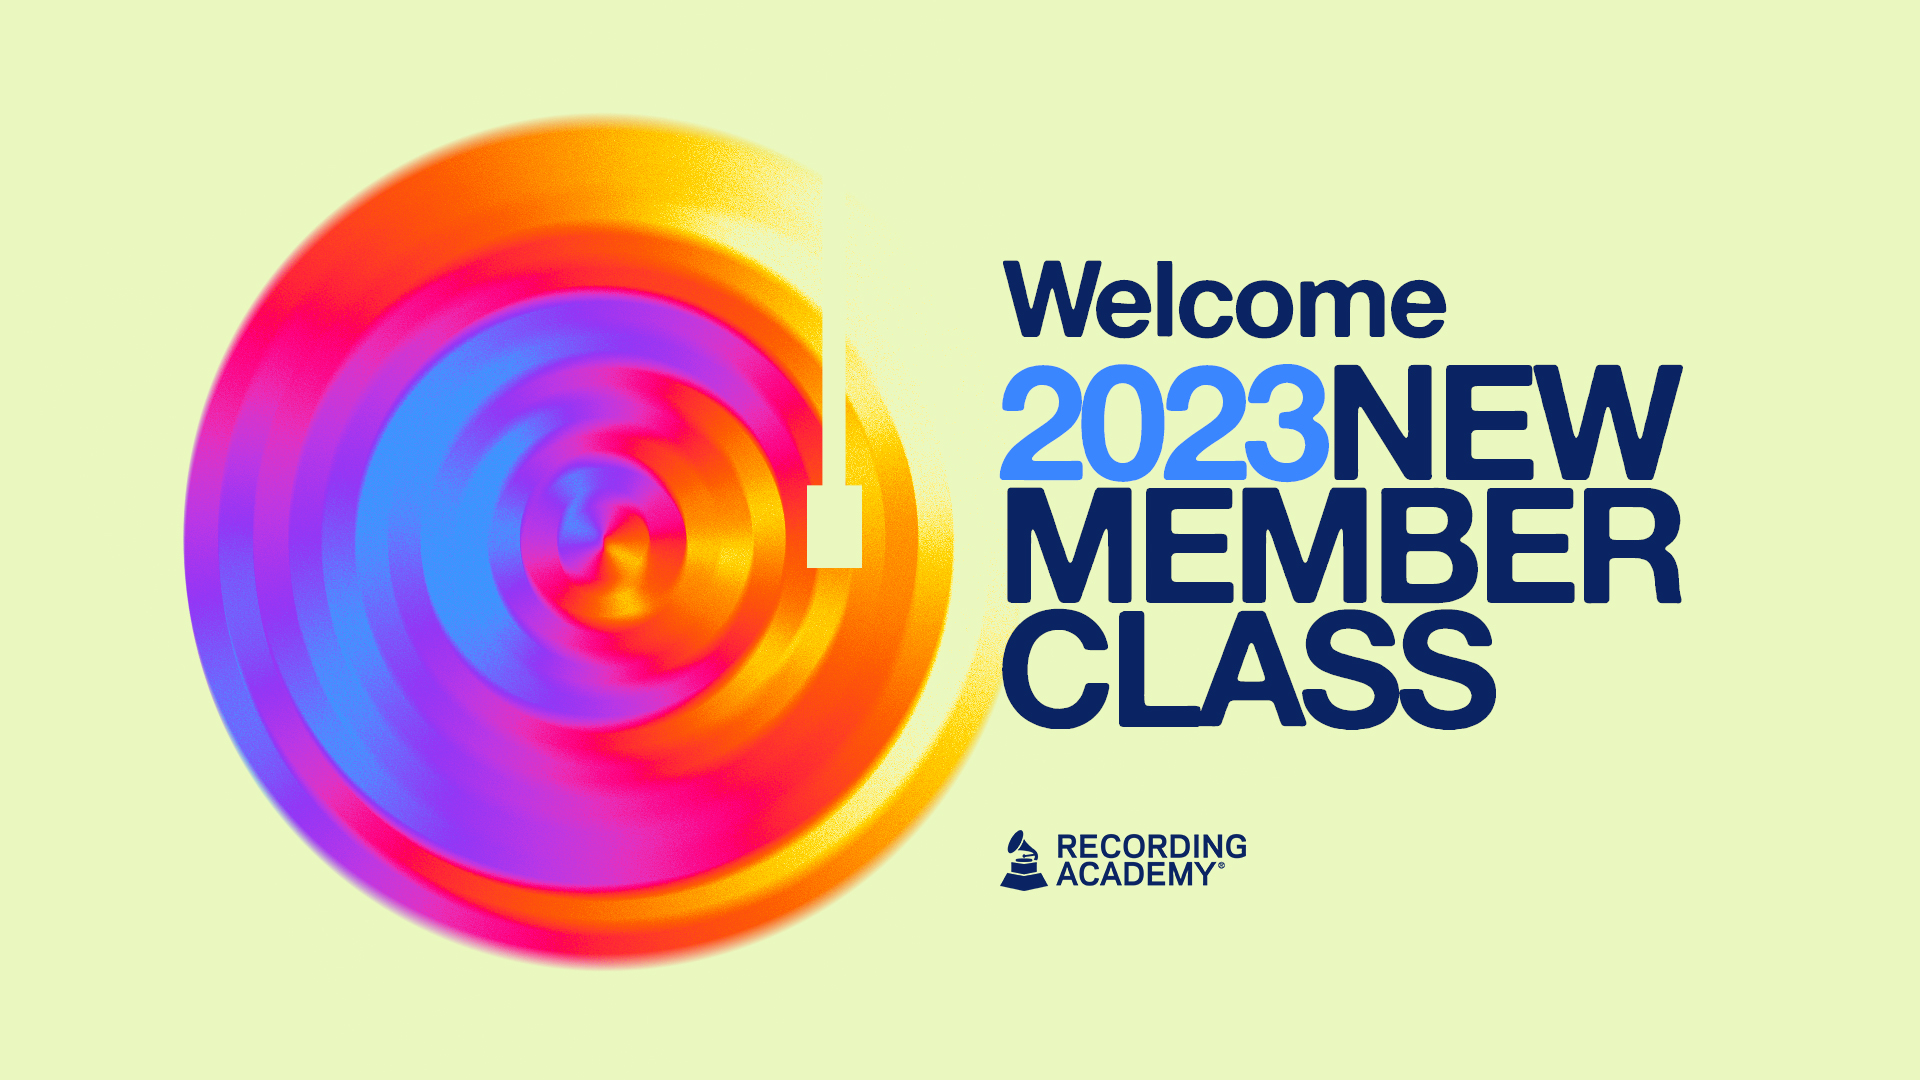 Recording Academy's 2023 New Member Class invitees